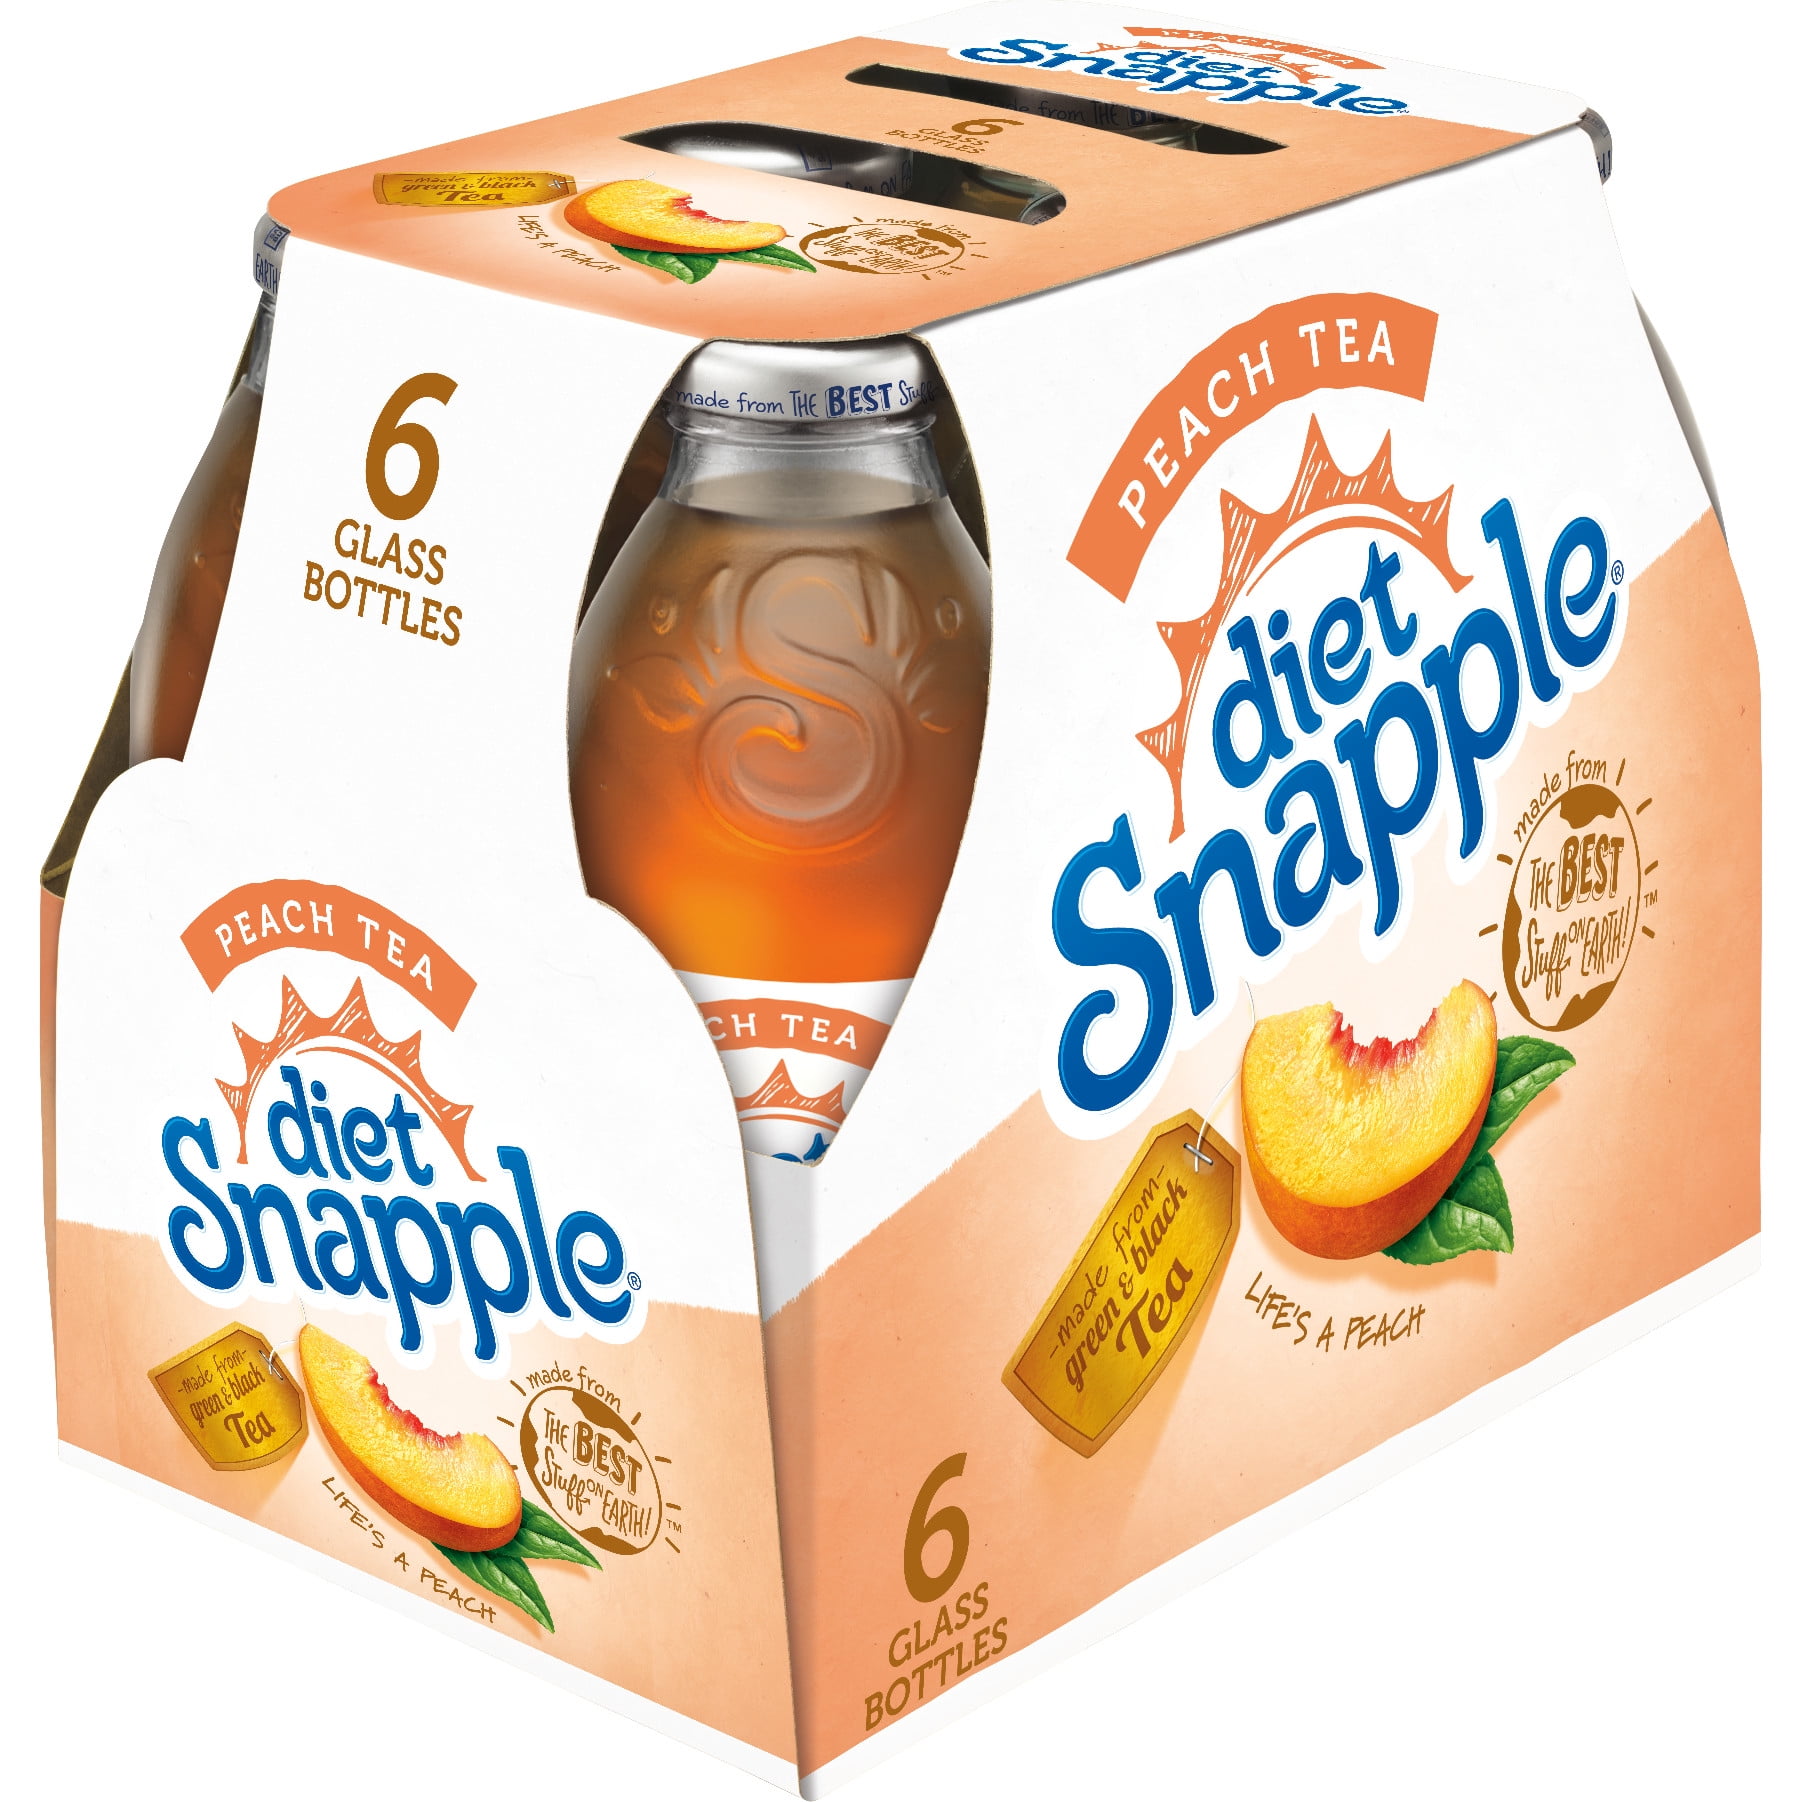 16 oz Peach Tea by Snapple at Fleet Farm